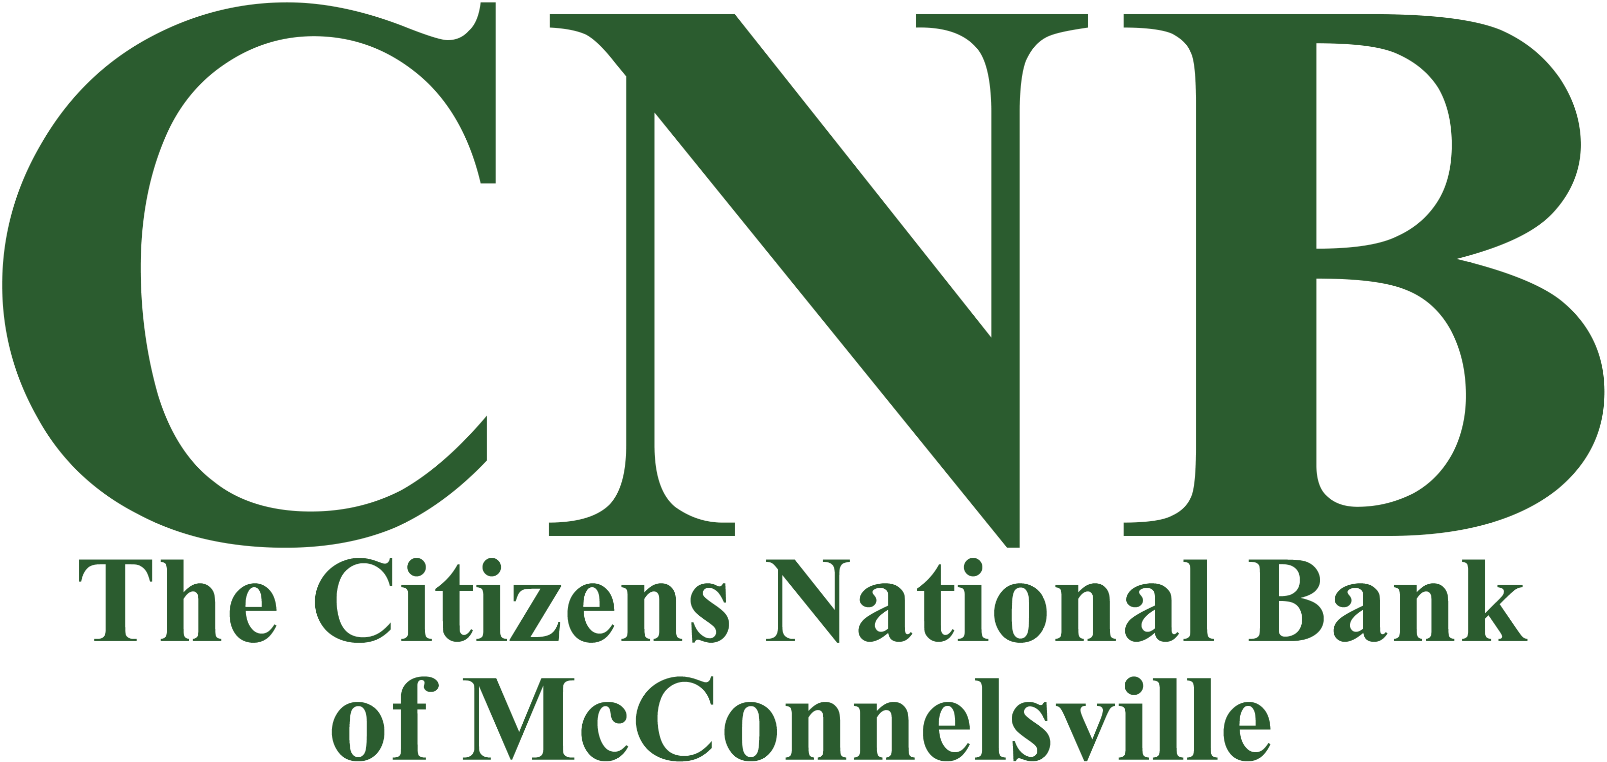 Citizens National Bank of McConnelsville Logo